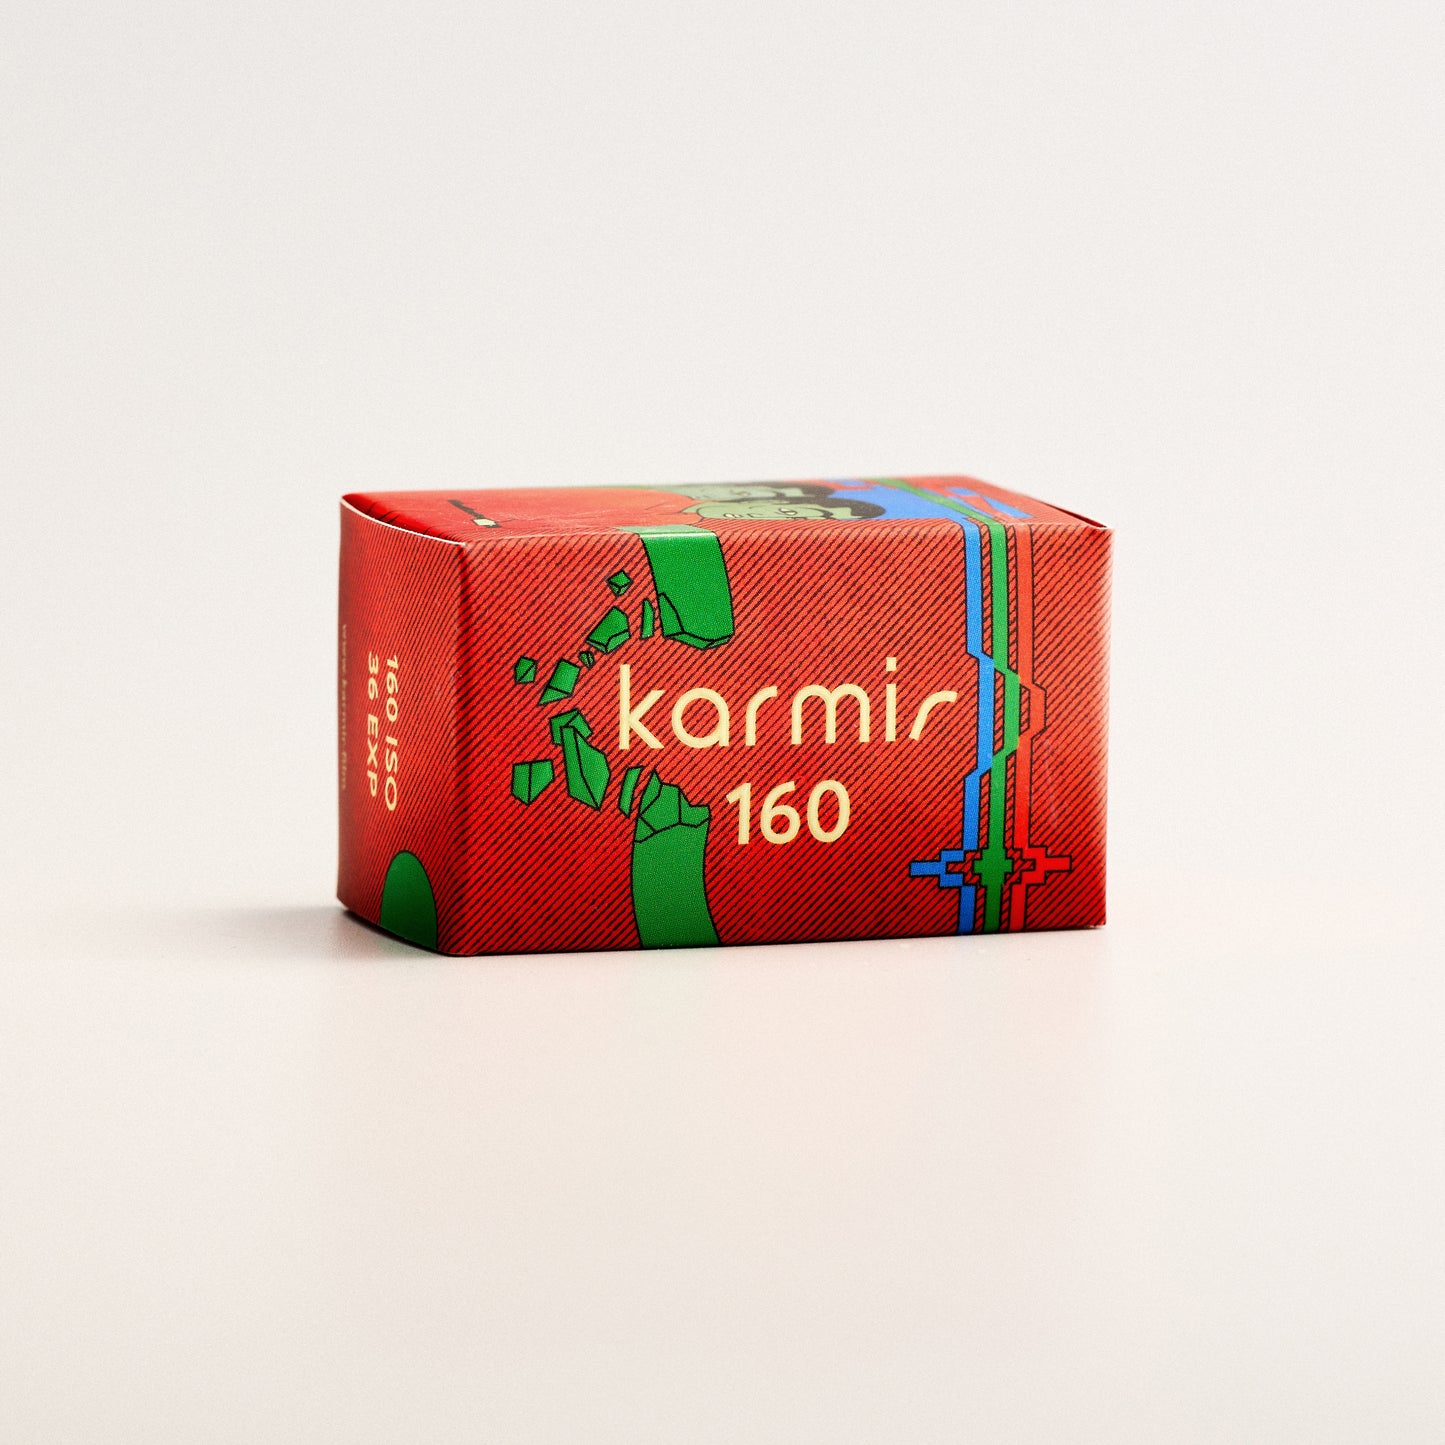 Karmir 160 35mm Film